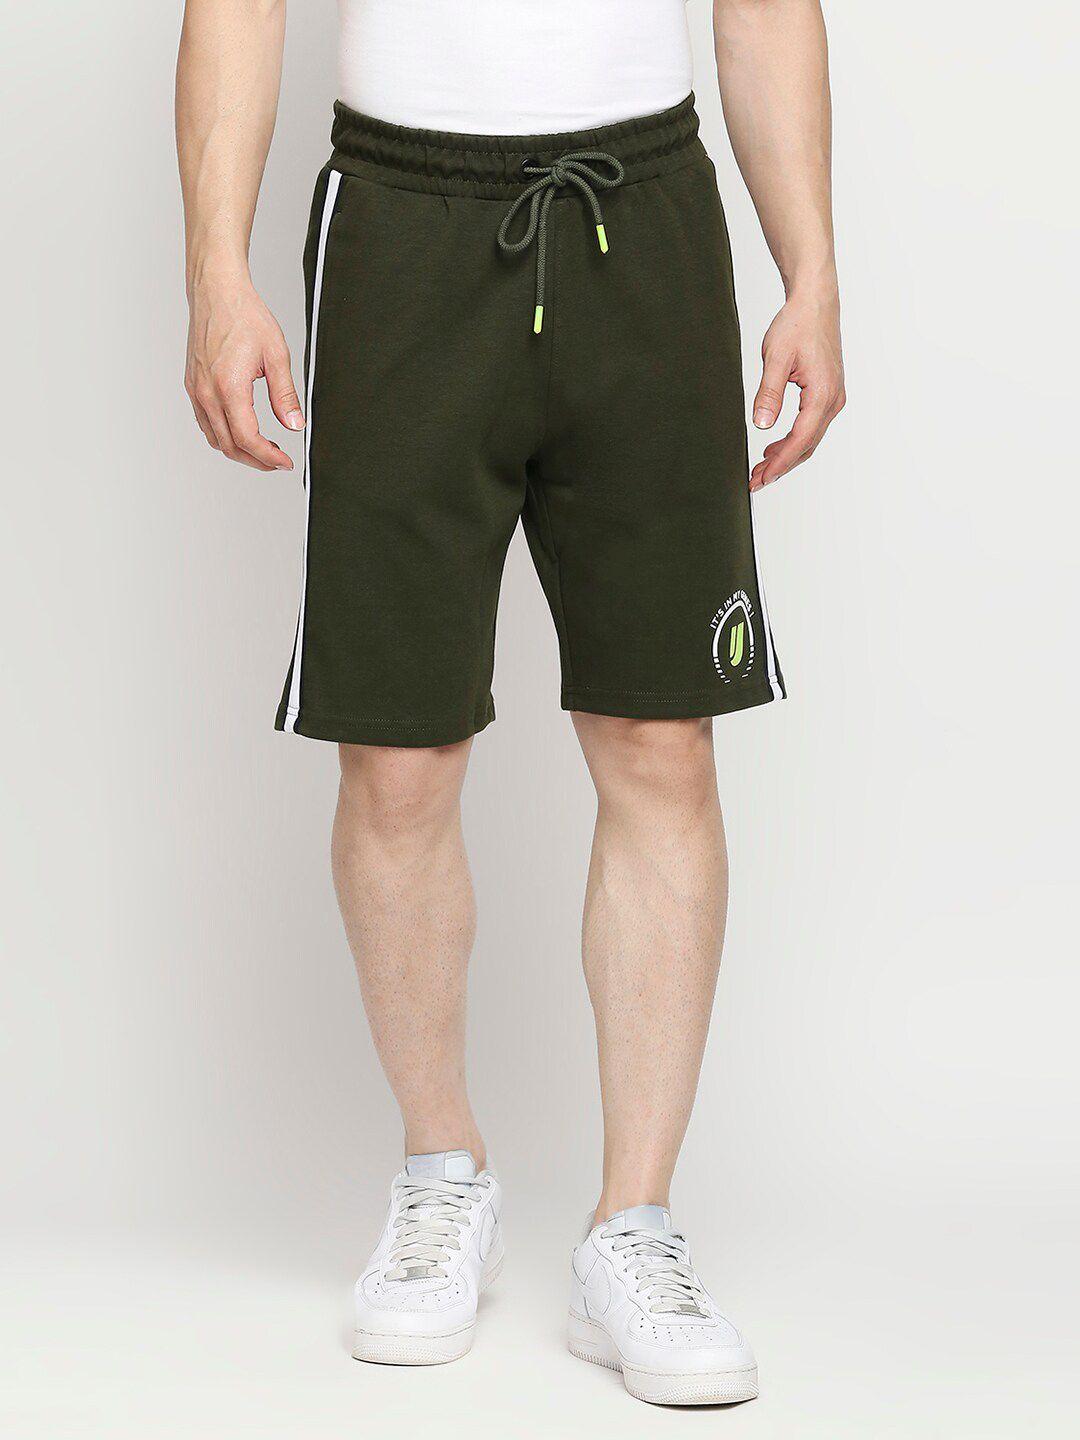 underjeans by spykar men green solid shorts